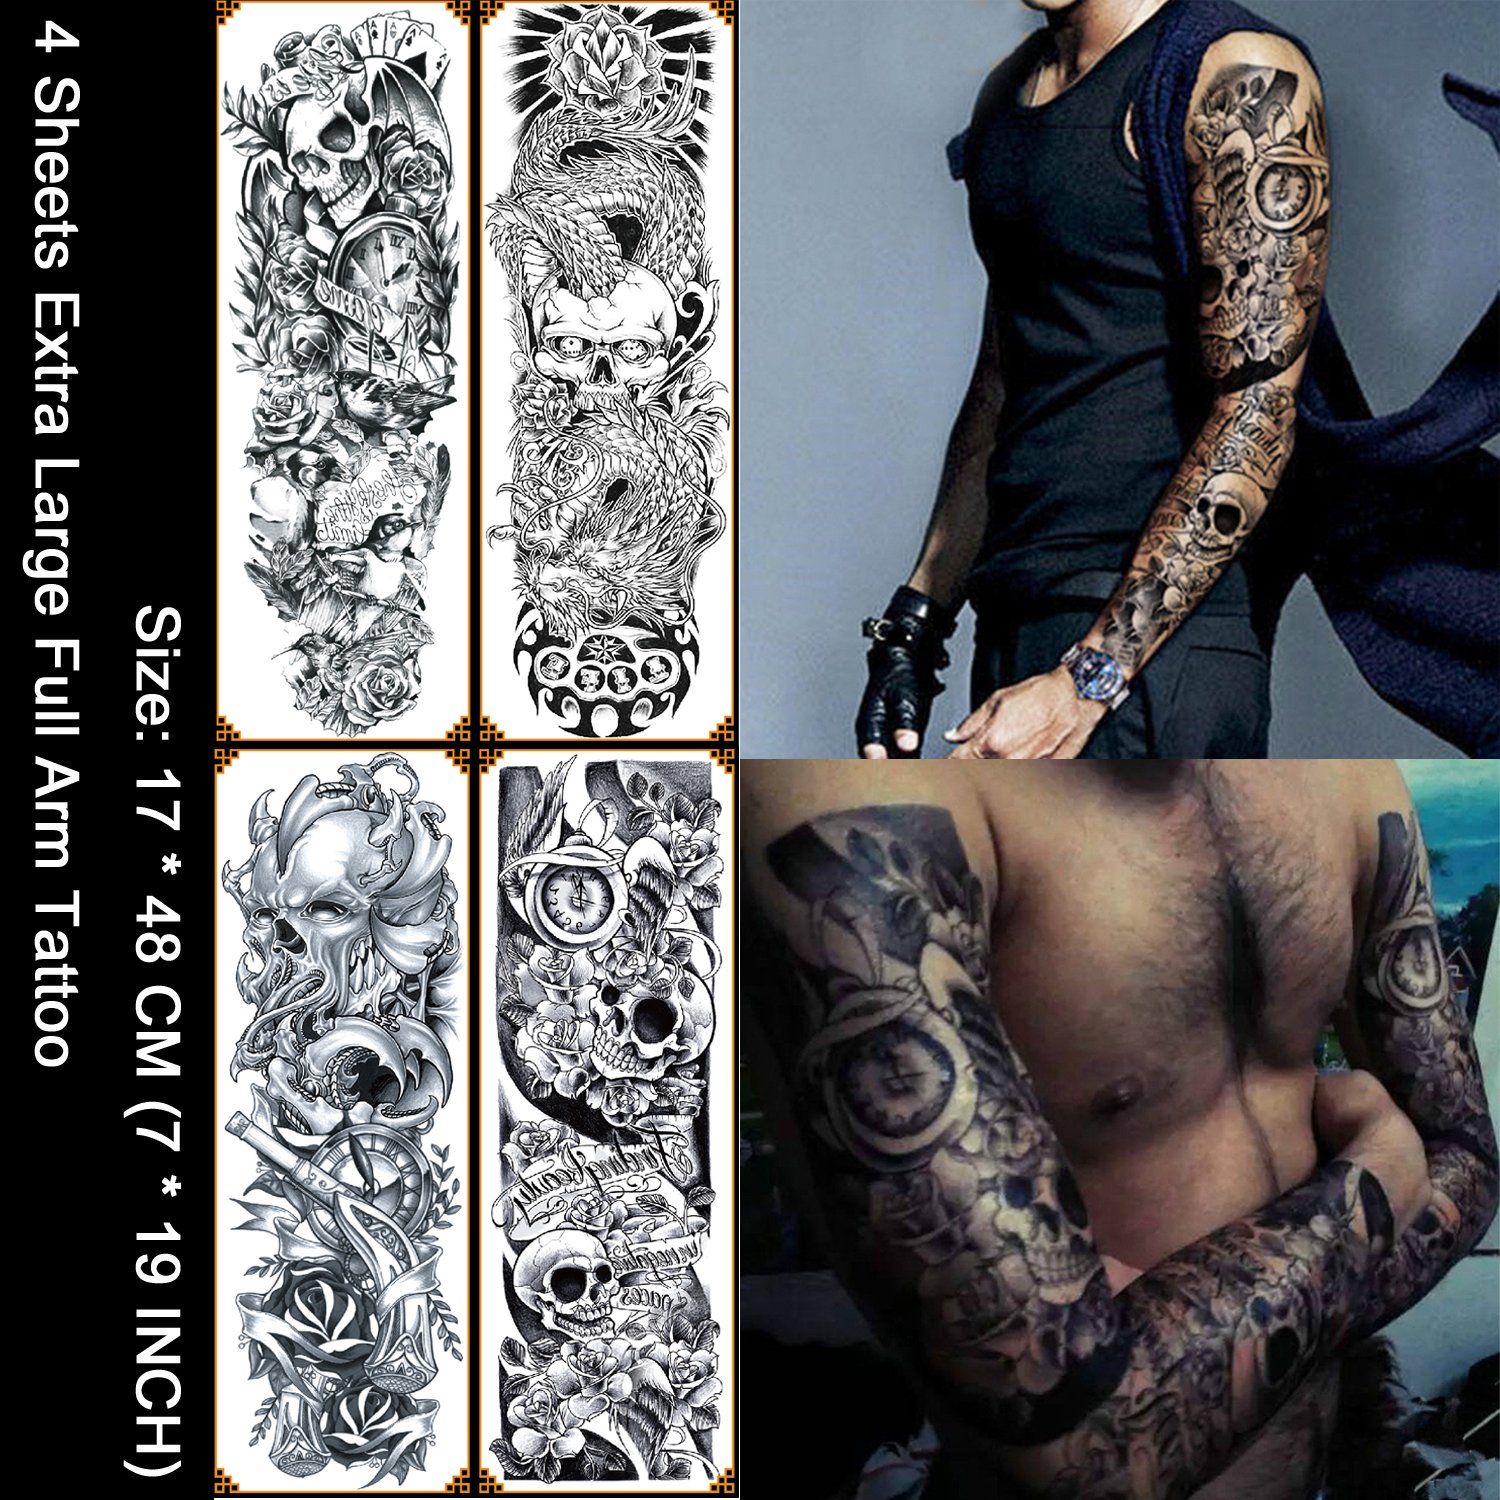 Large Temporary Tattoos Sticker Tattoo Waterproof Fake Tattoos Body Art for Men Women